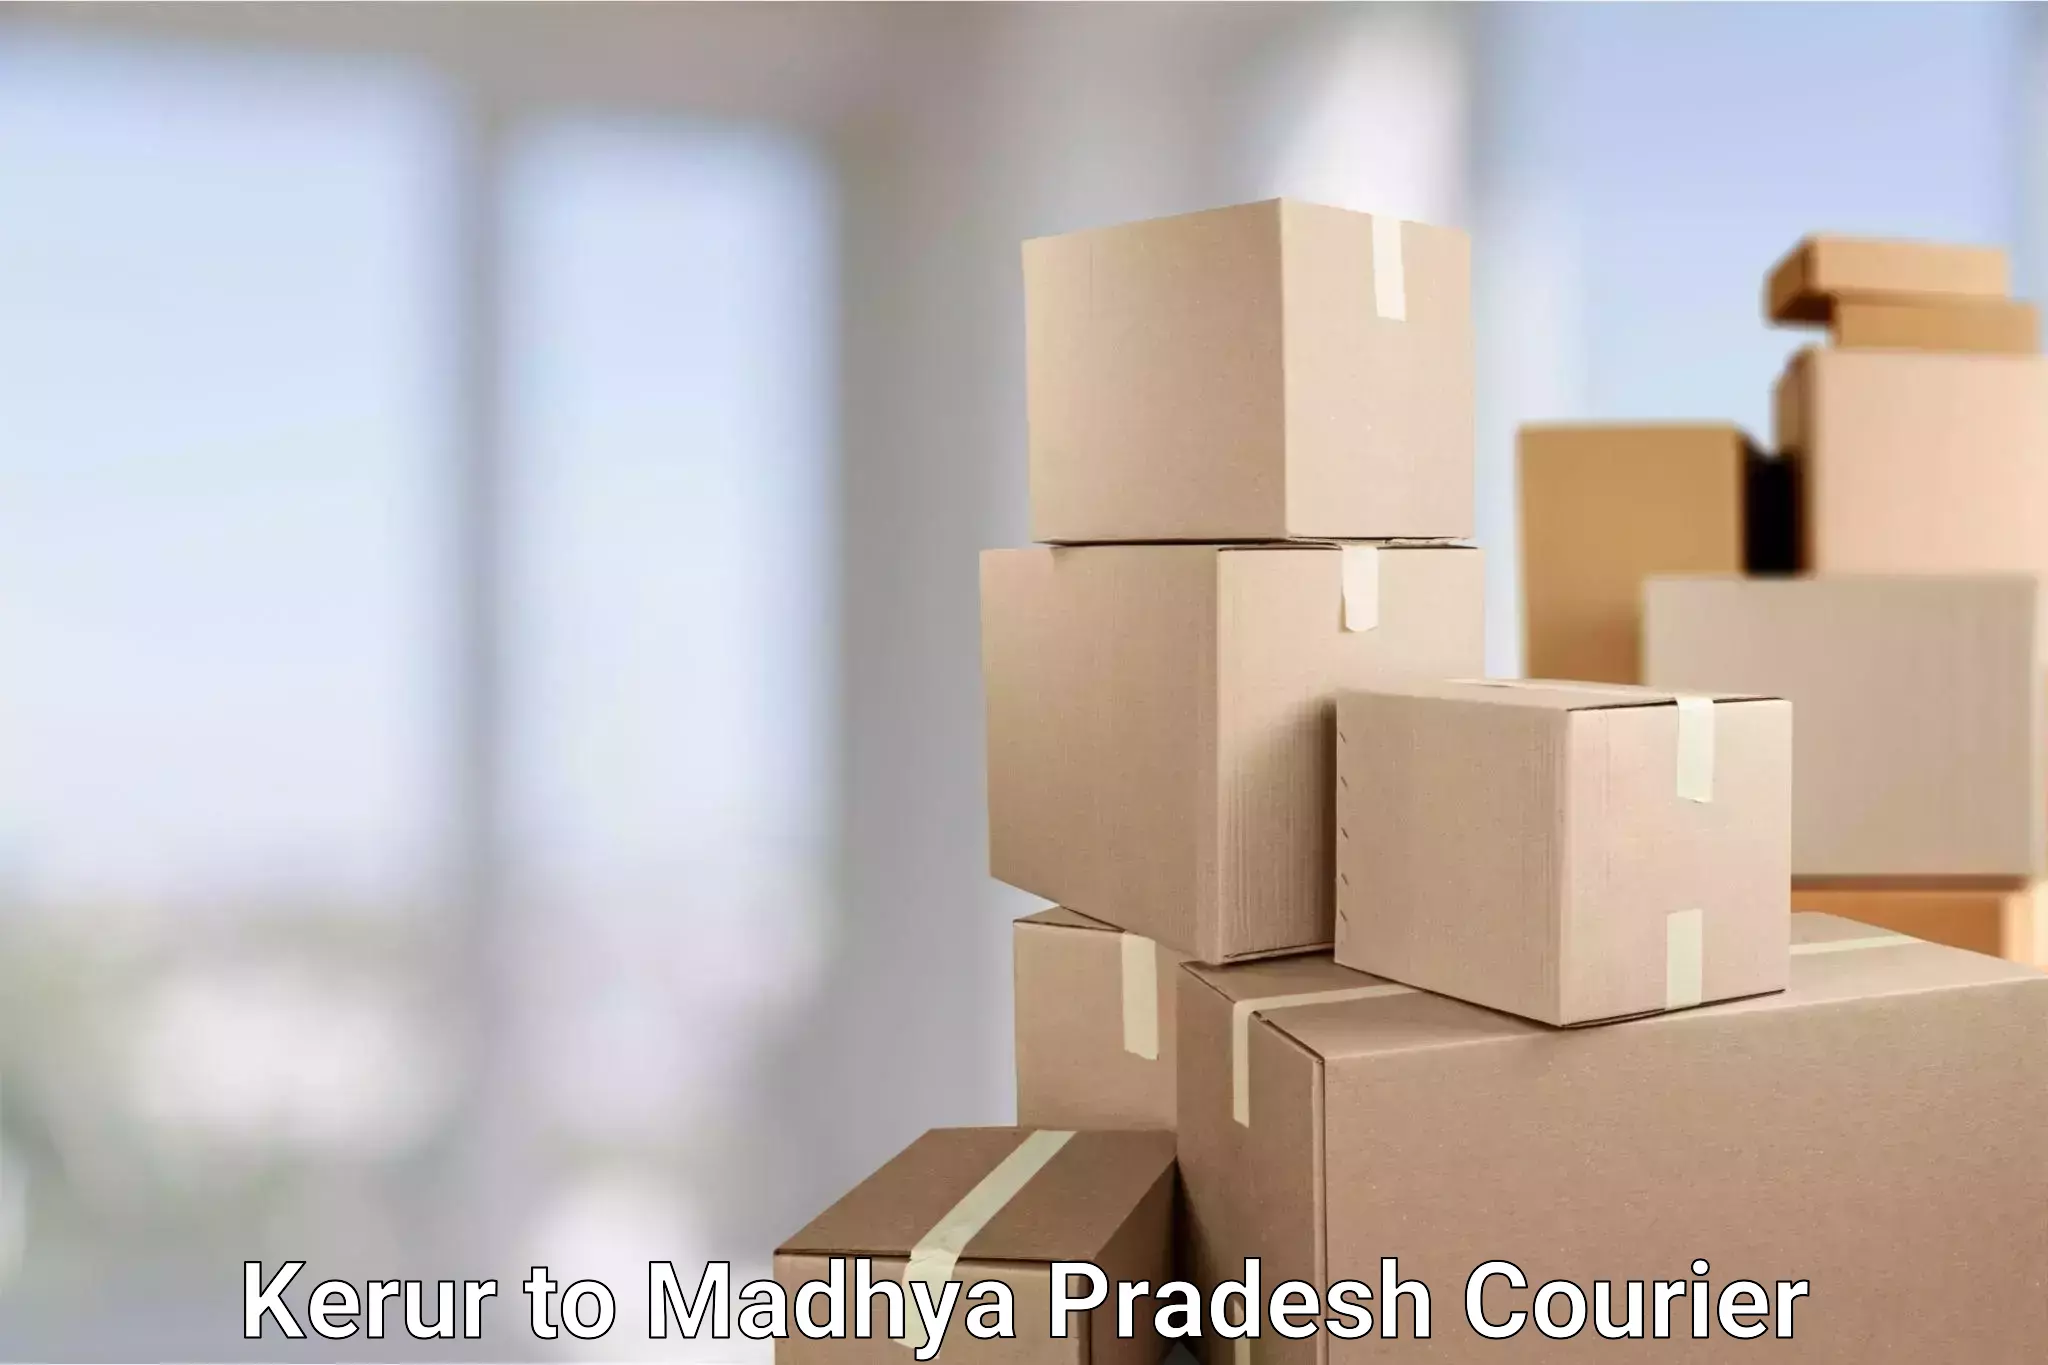 Courier service partnerships Kerur to Vijayraghavgarh